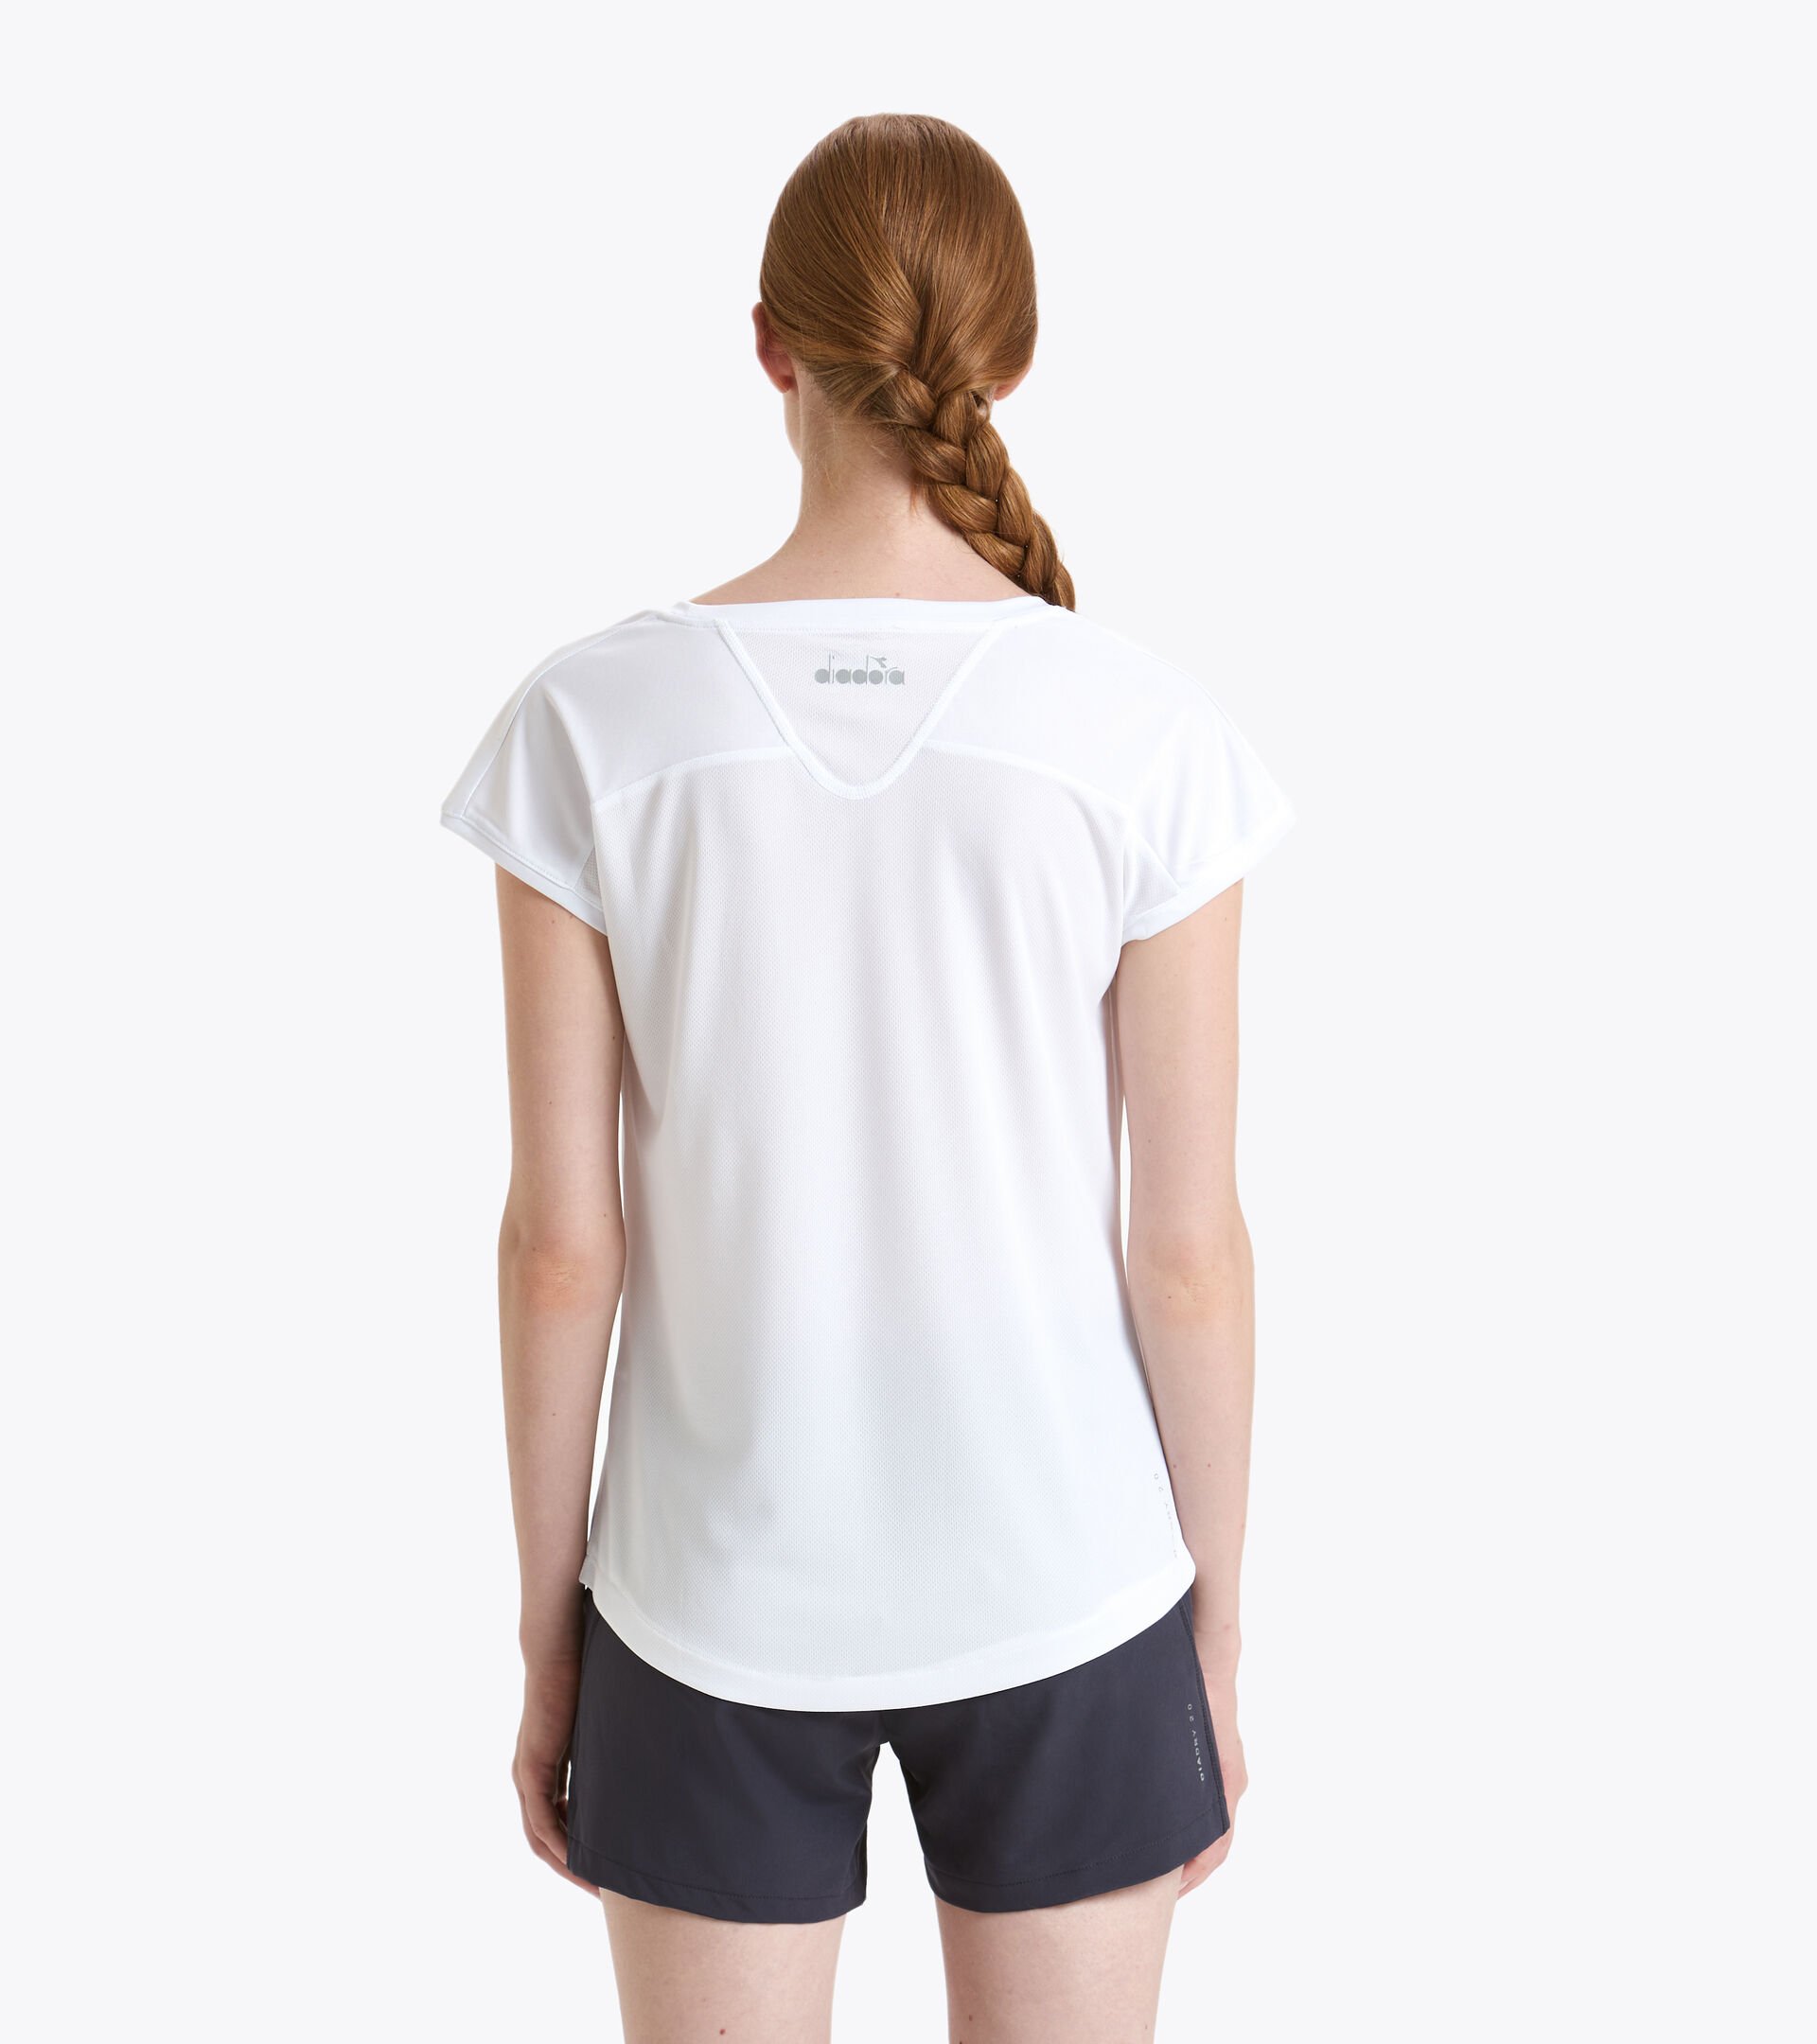 Tennis T-shirt - Women L. T-SHIRT COURT OPTICAL WHITE - Diadora